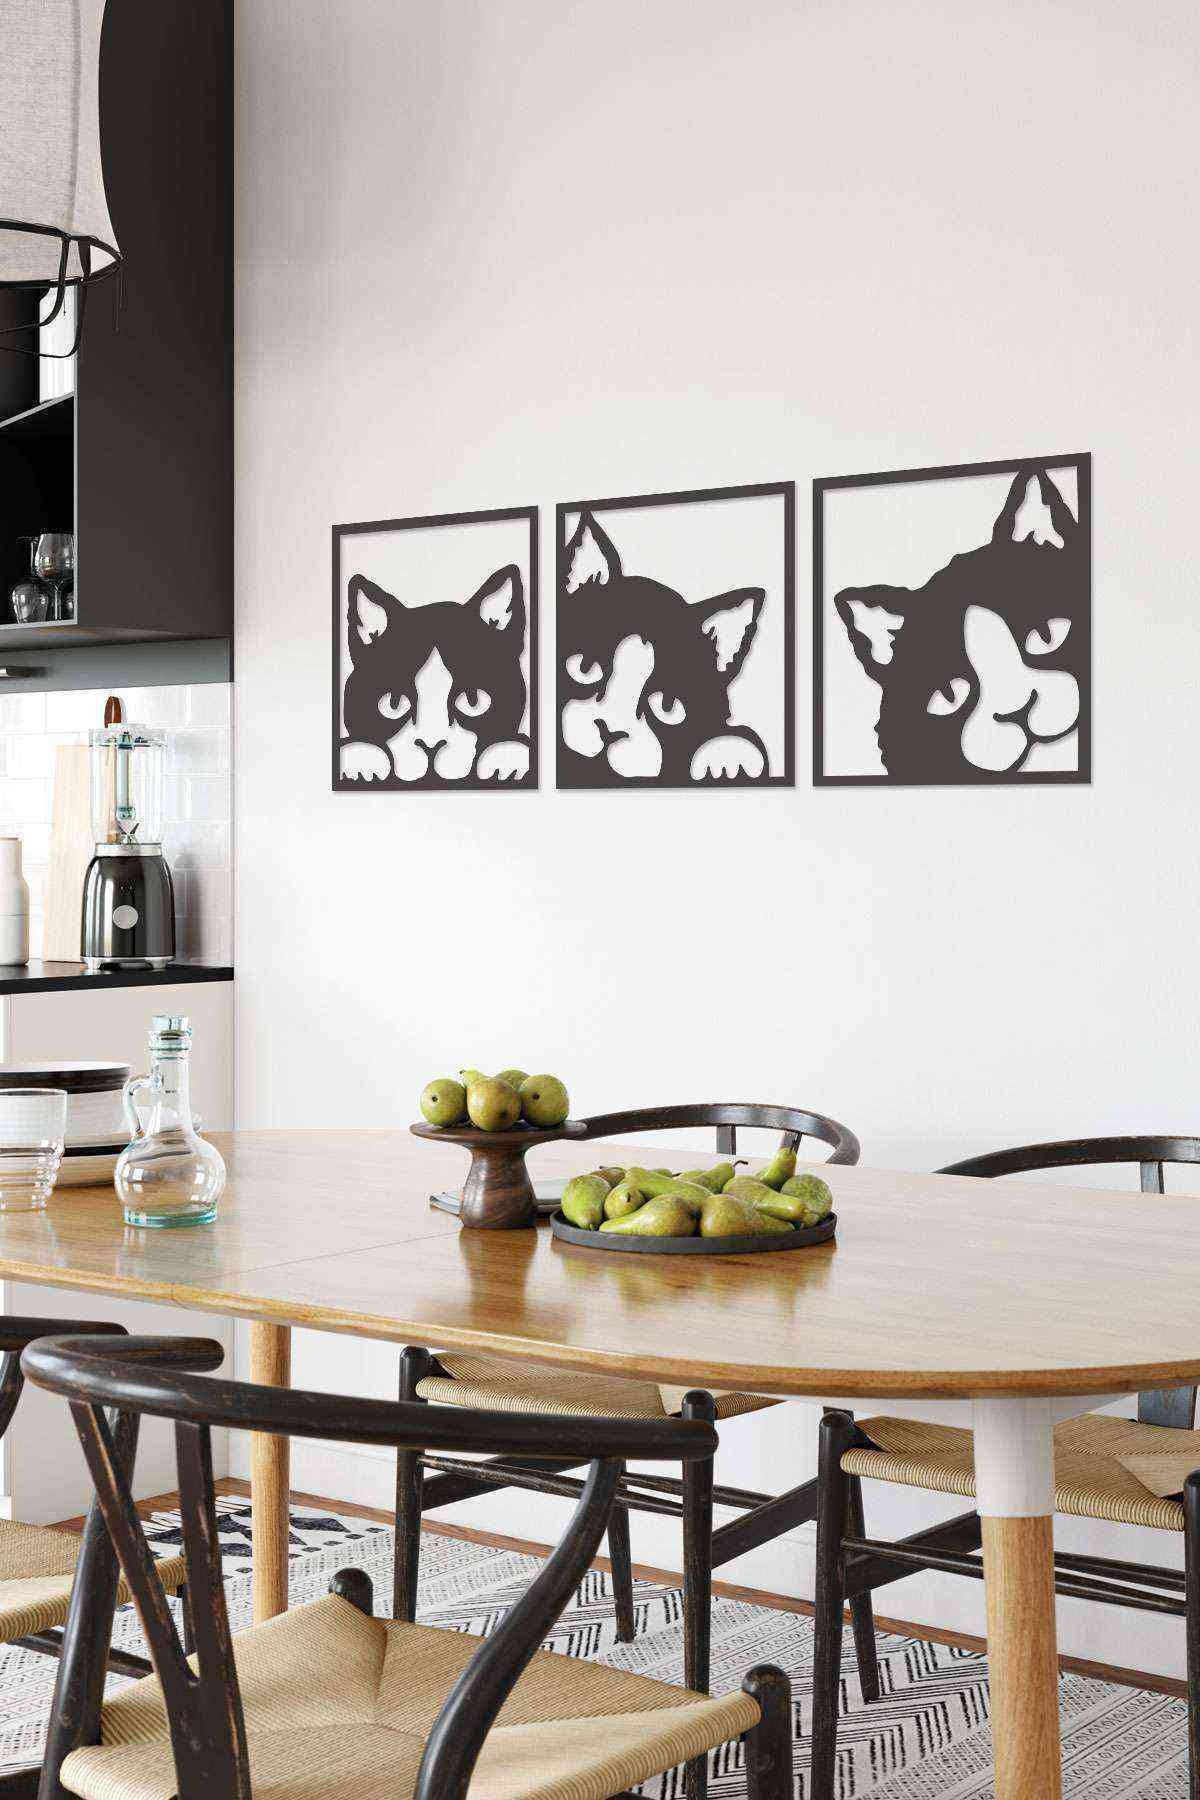 Kedi Cats Figürlü 3D Mdf Tablo Evinize Ofisinize Yeni Tarz Wall